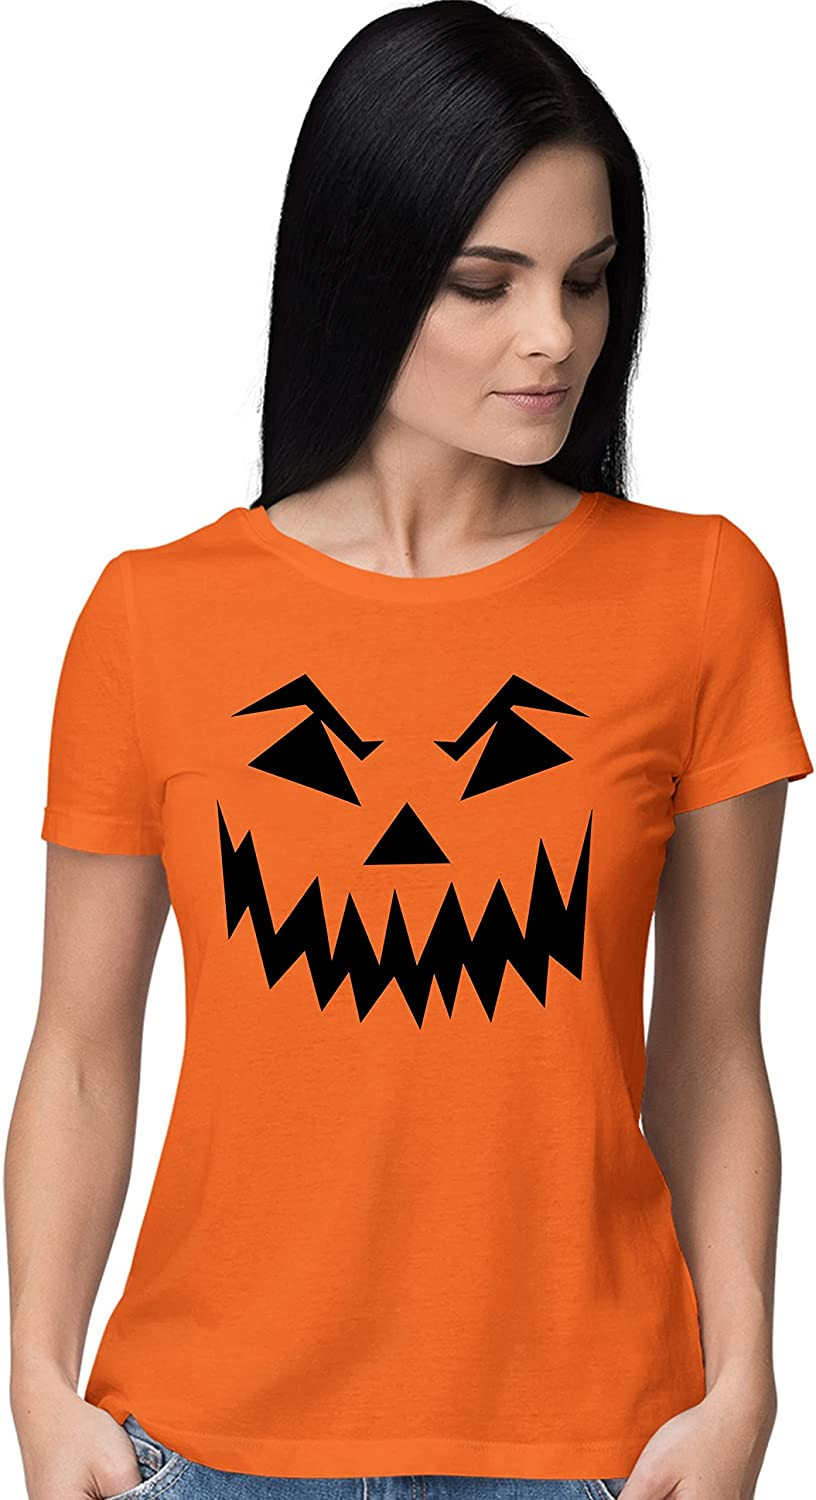 Scary Pumpkin Jack O' Lantern Halloween T-Shirt